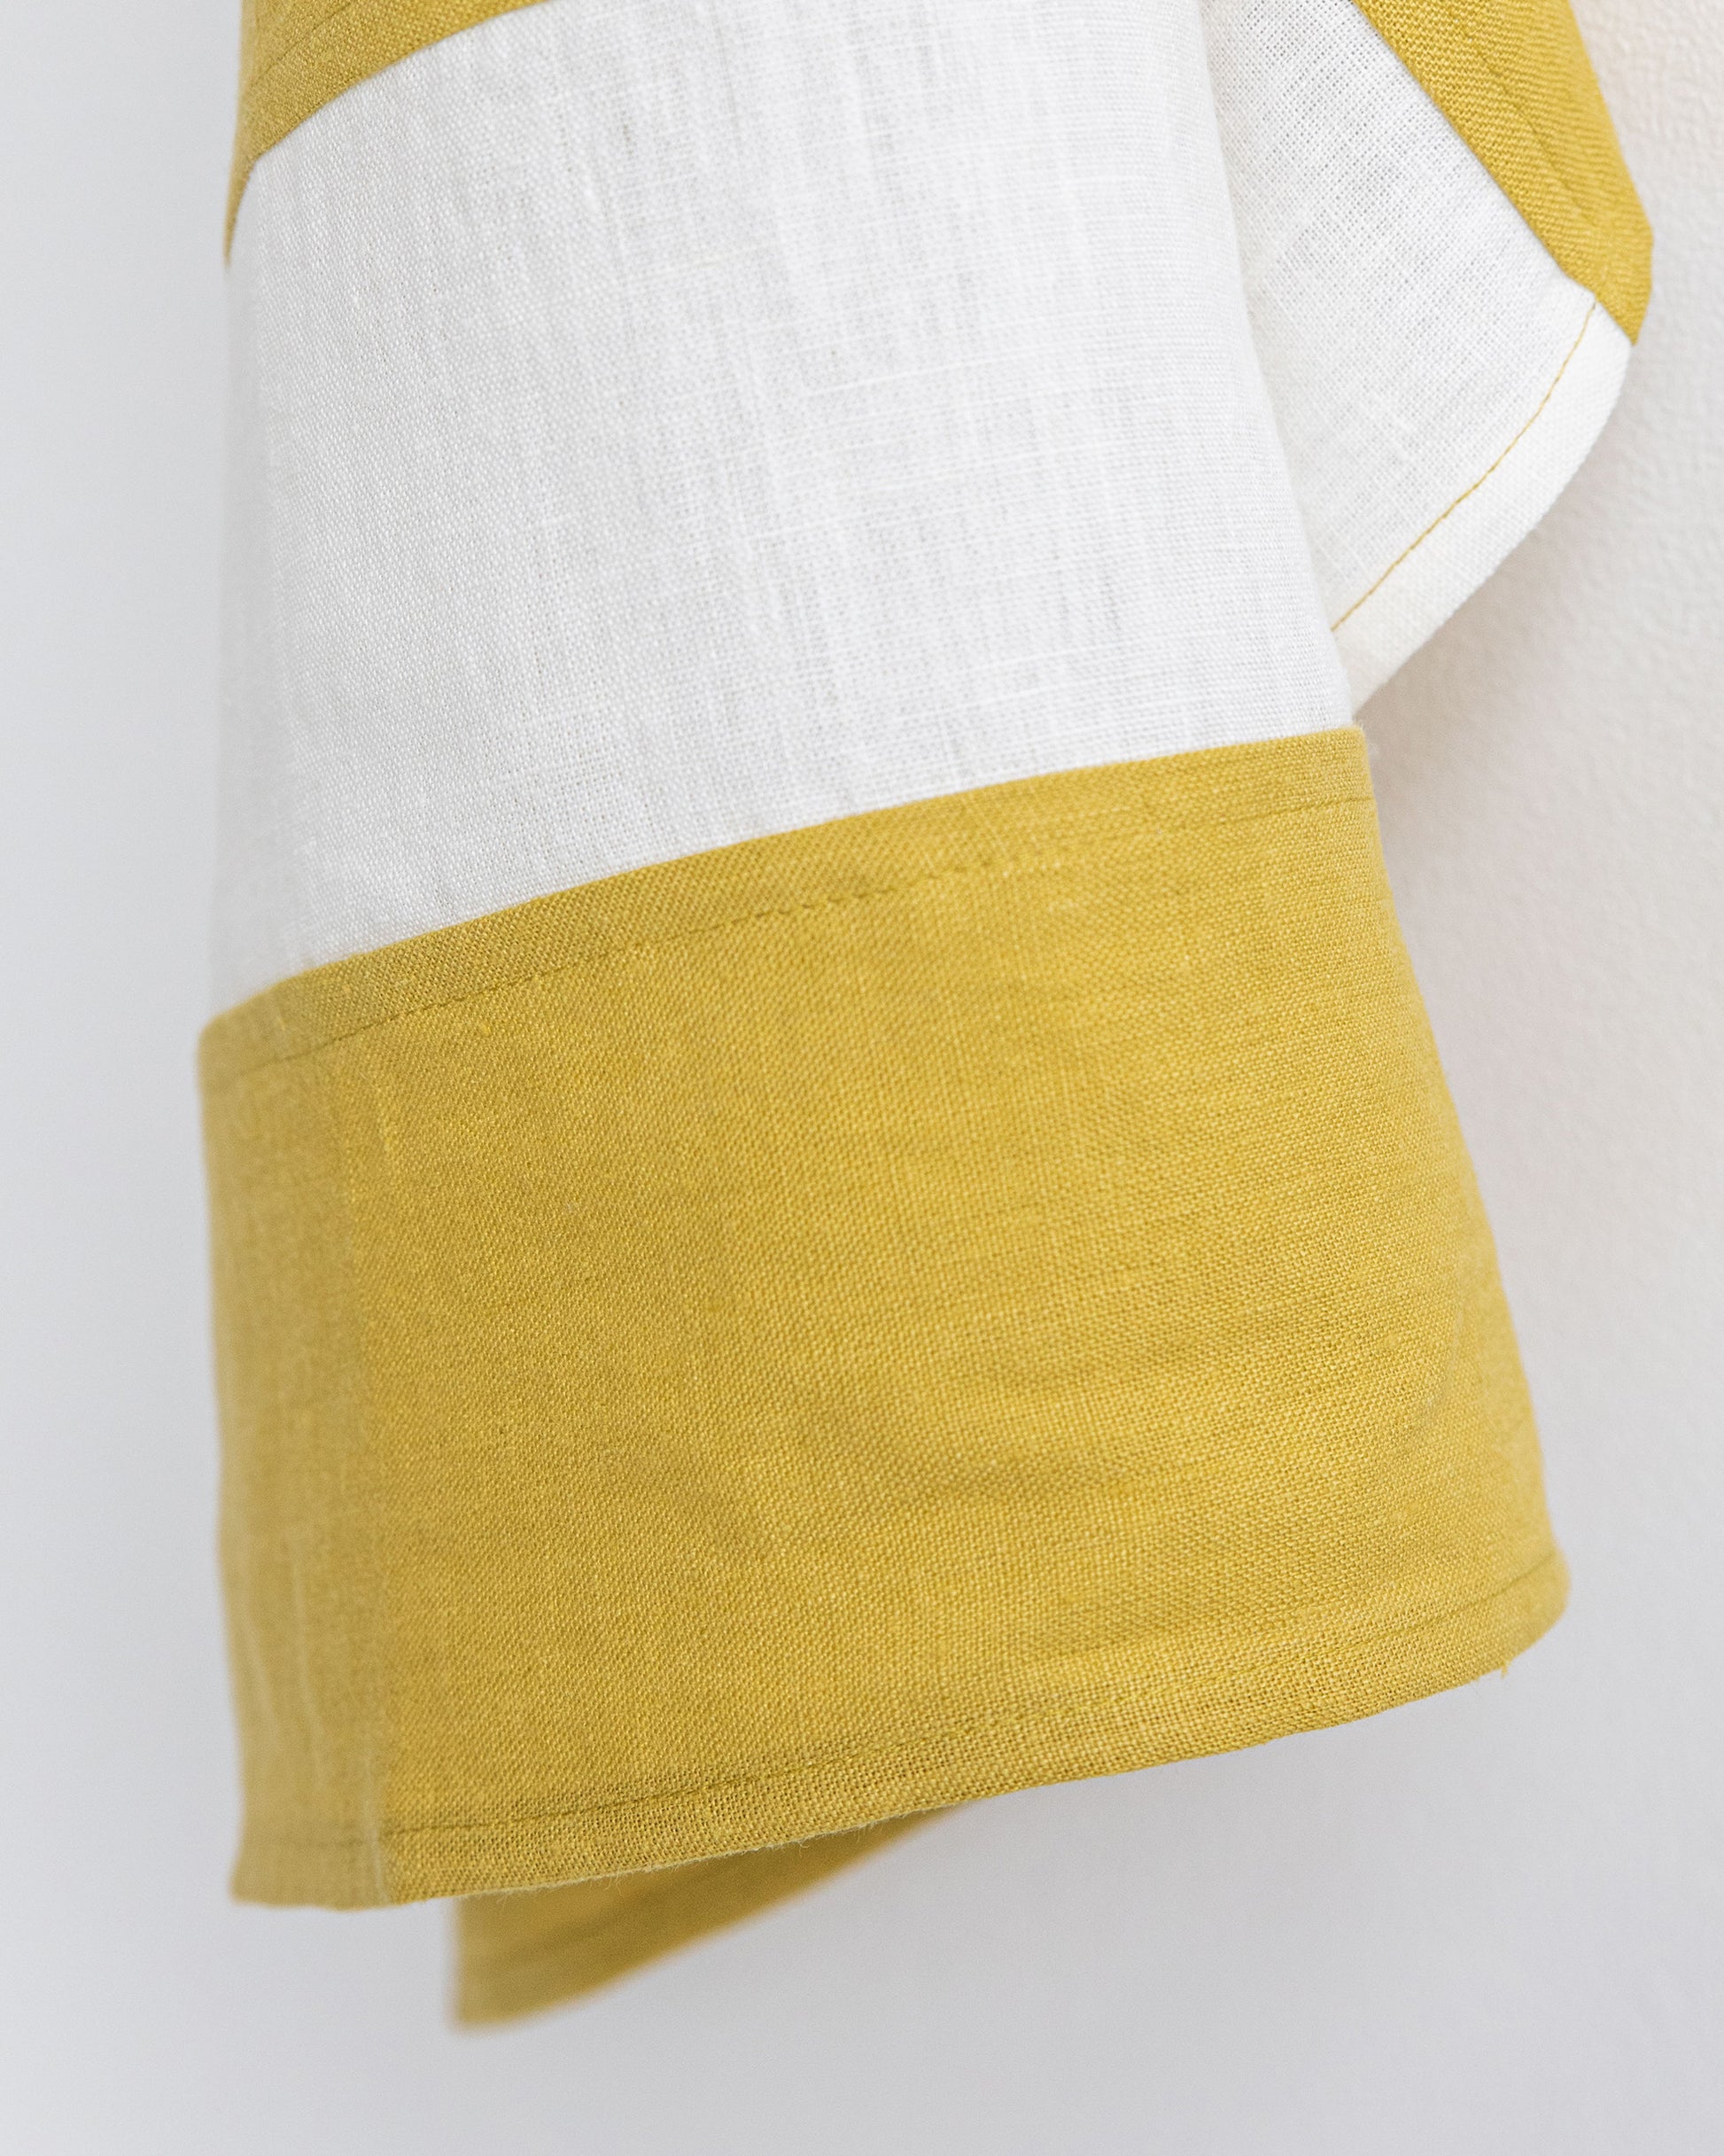 Zero-waste striped linen tea towel in Moss yellow - MagicLinen